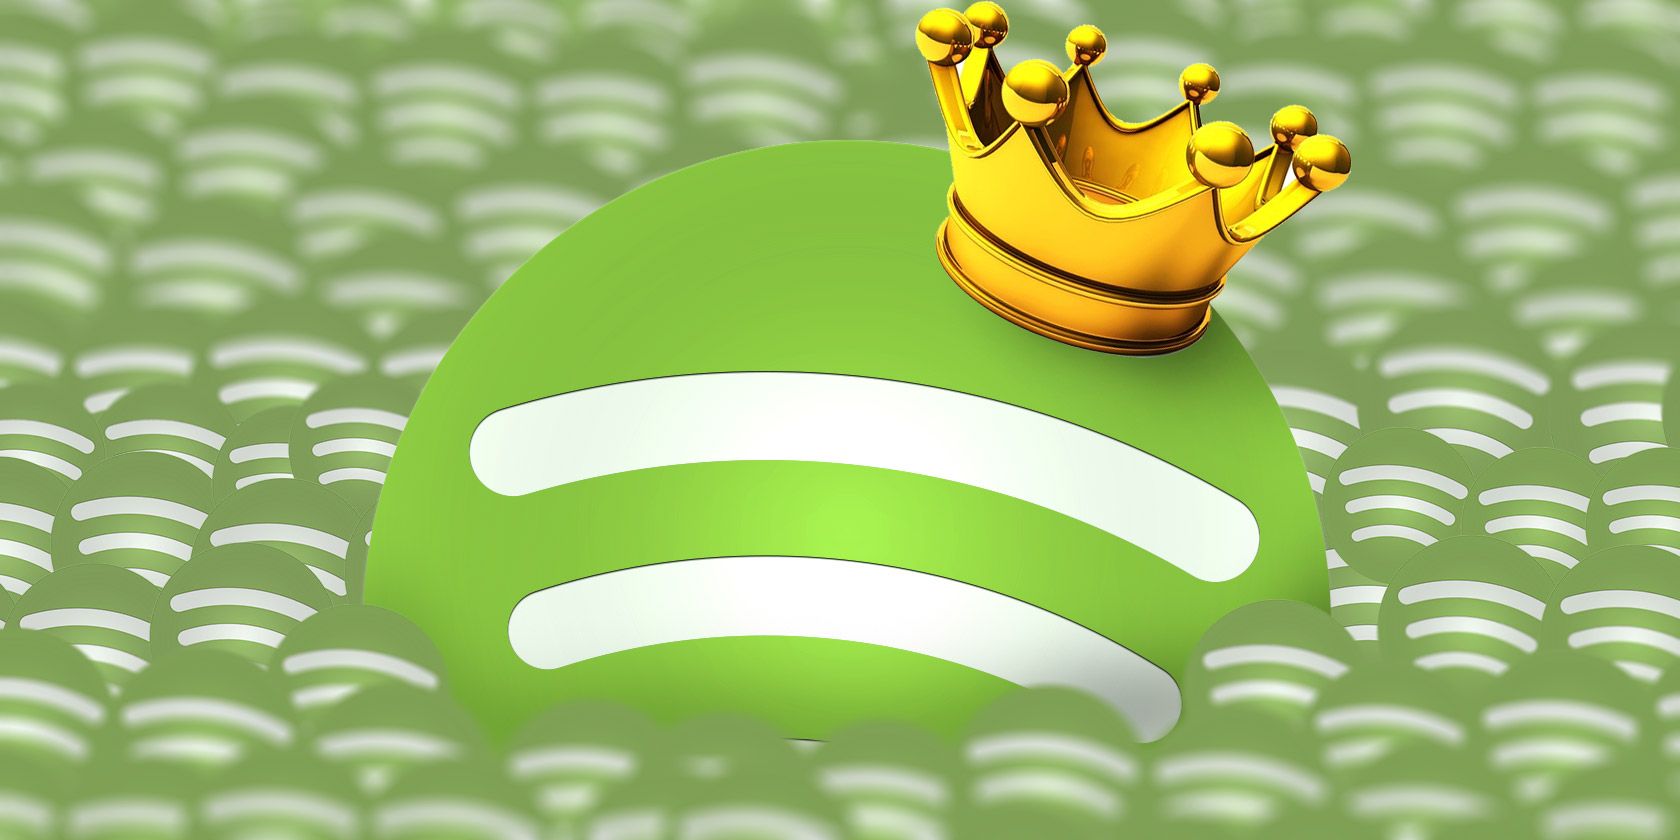 Spotify logo wearing a crown, in a sea of smaller Spotify logos